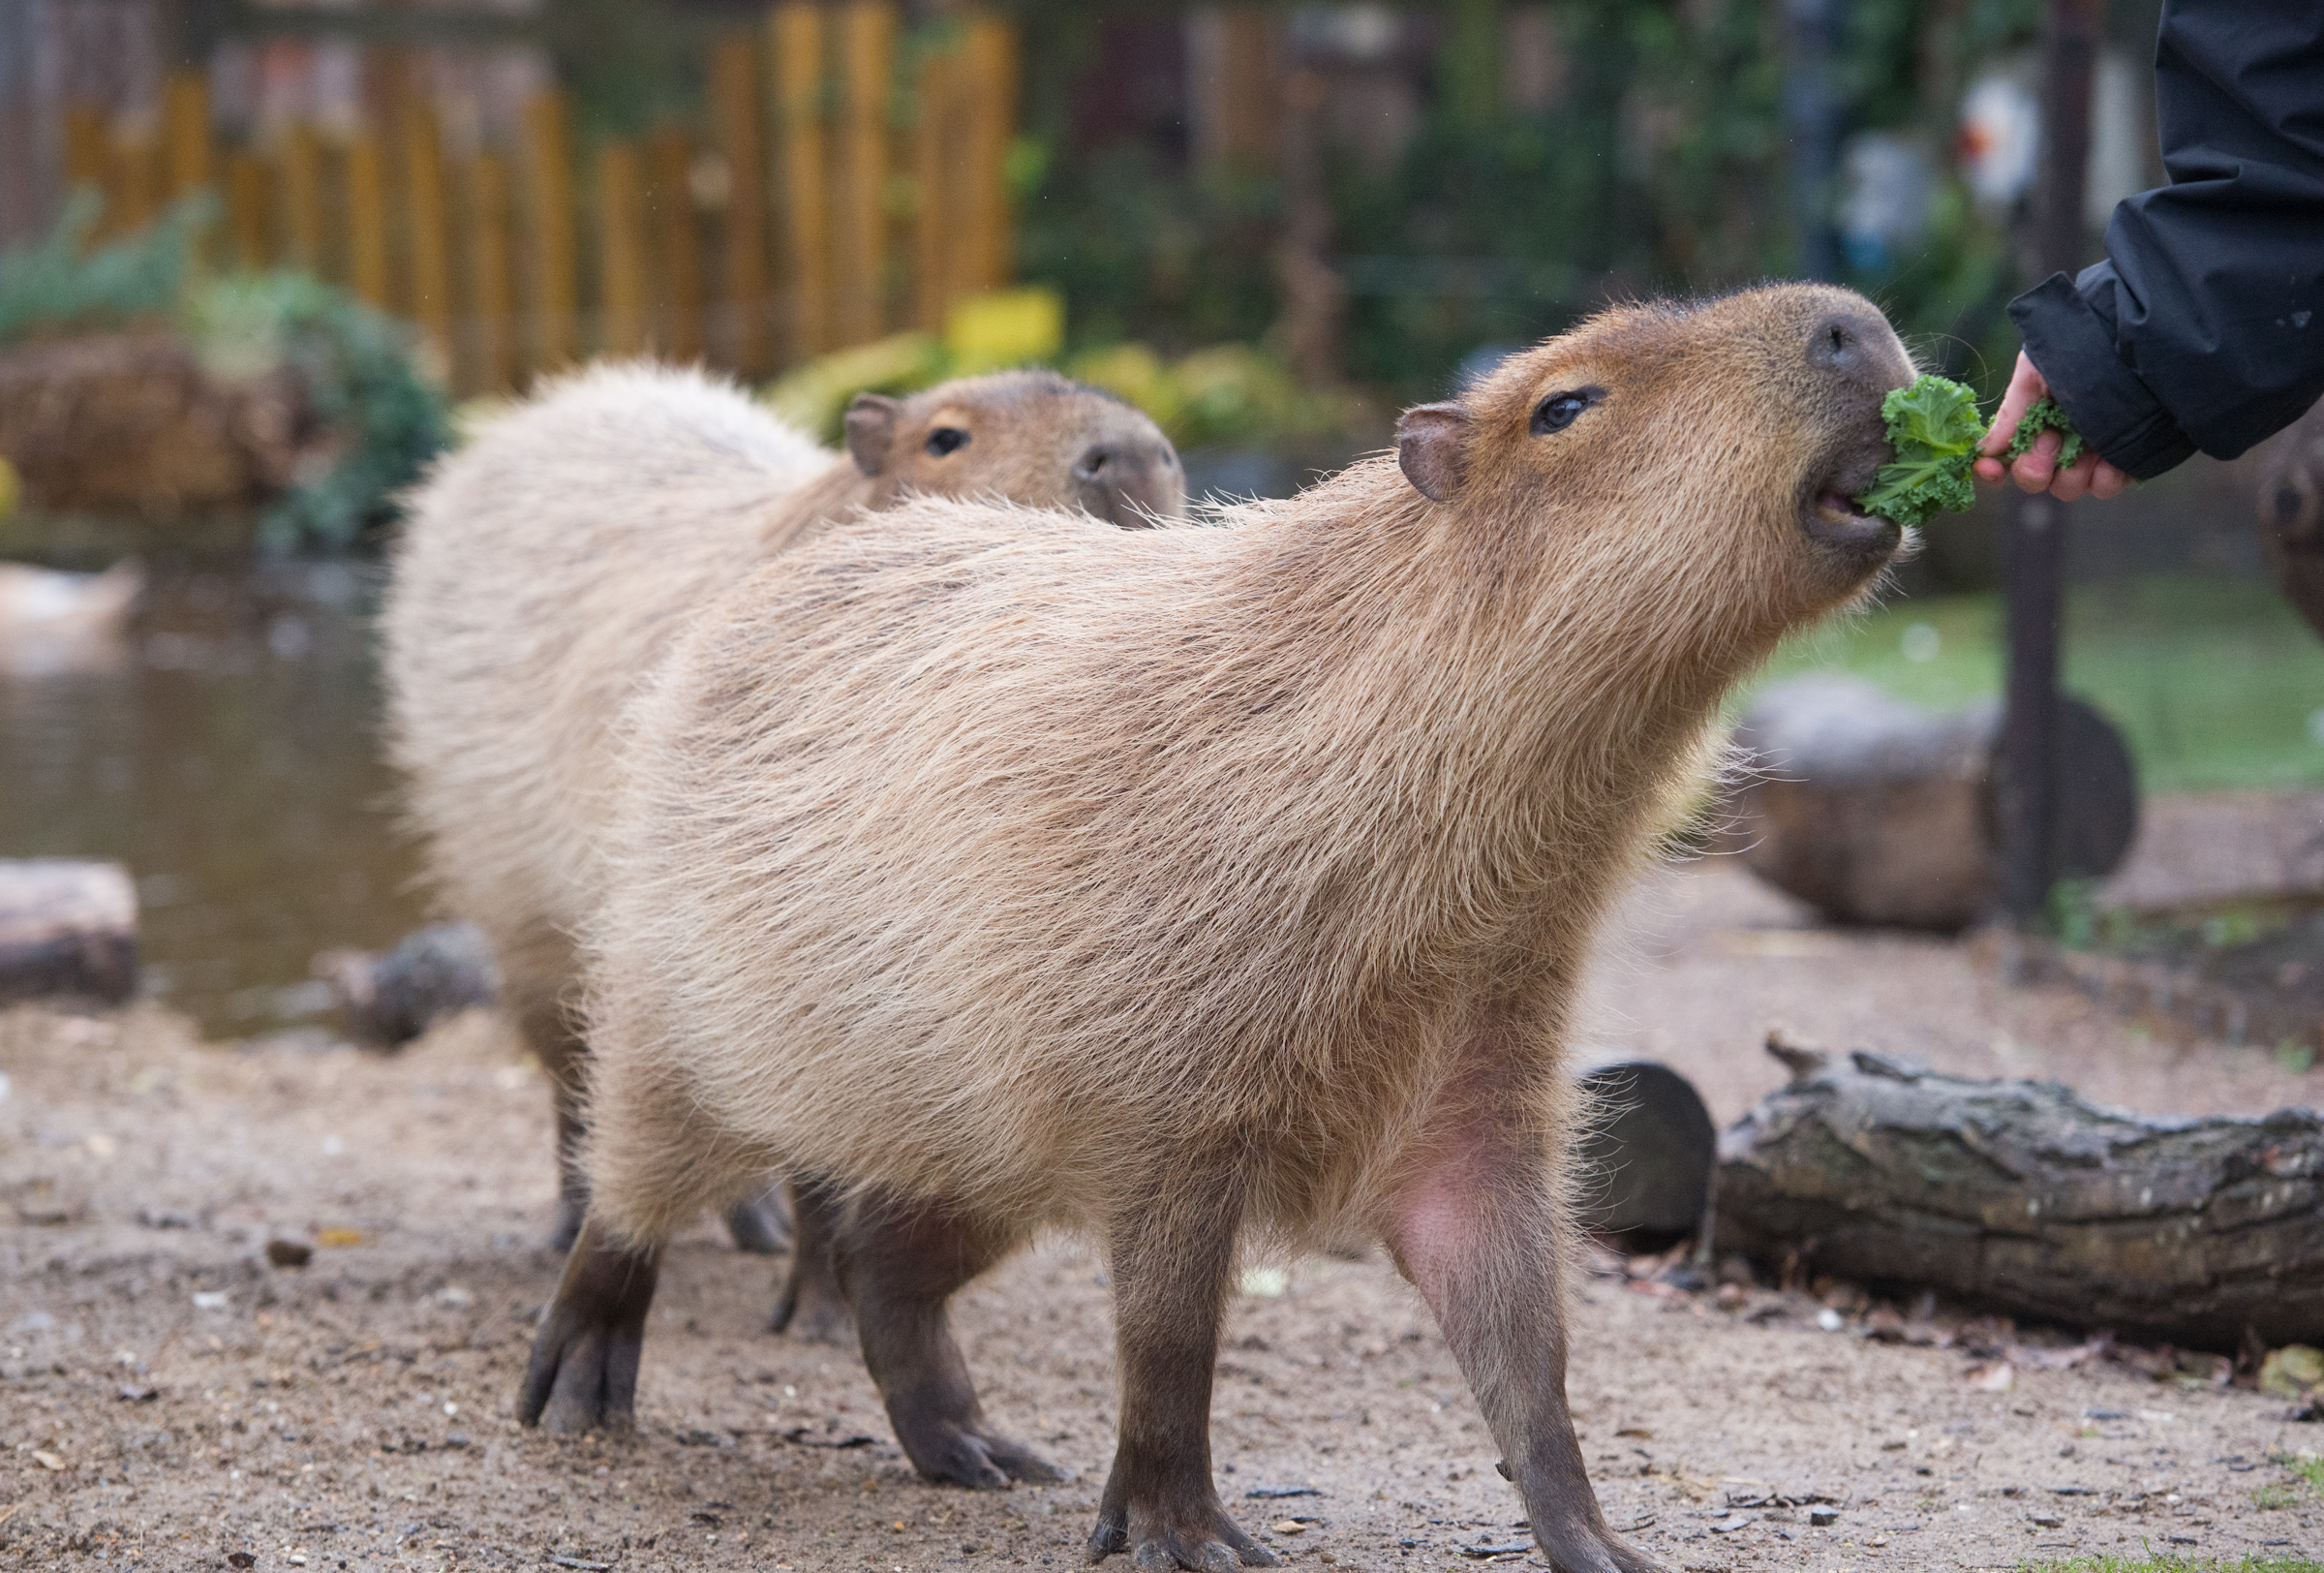 Capybara Being Fed